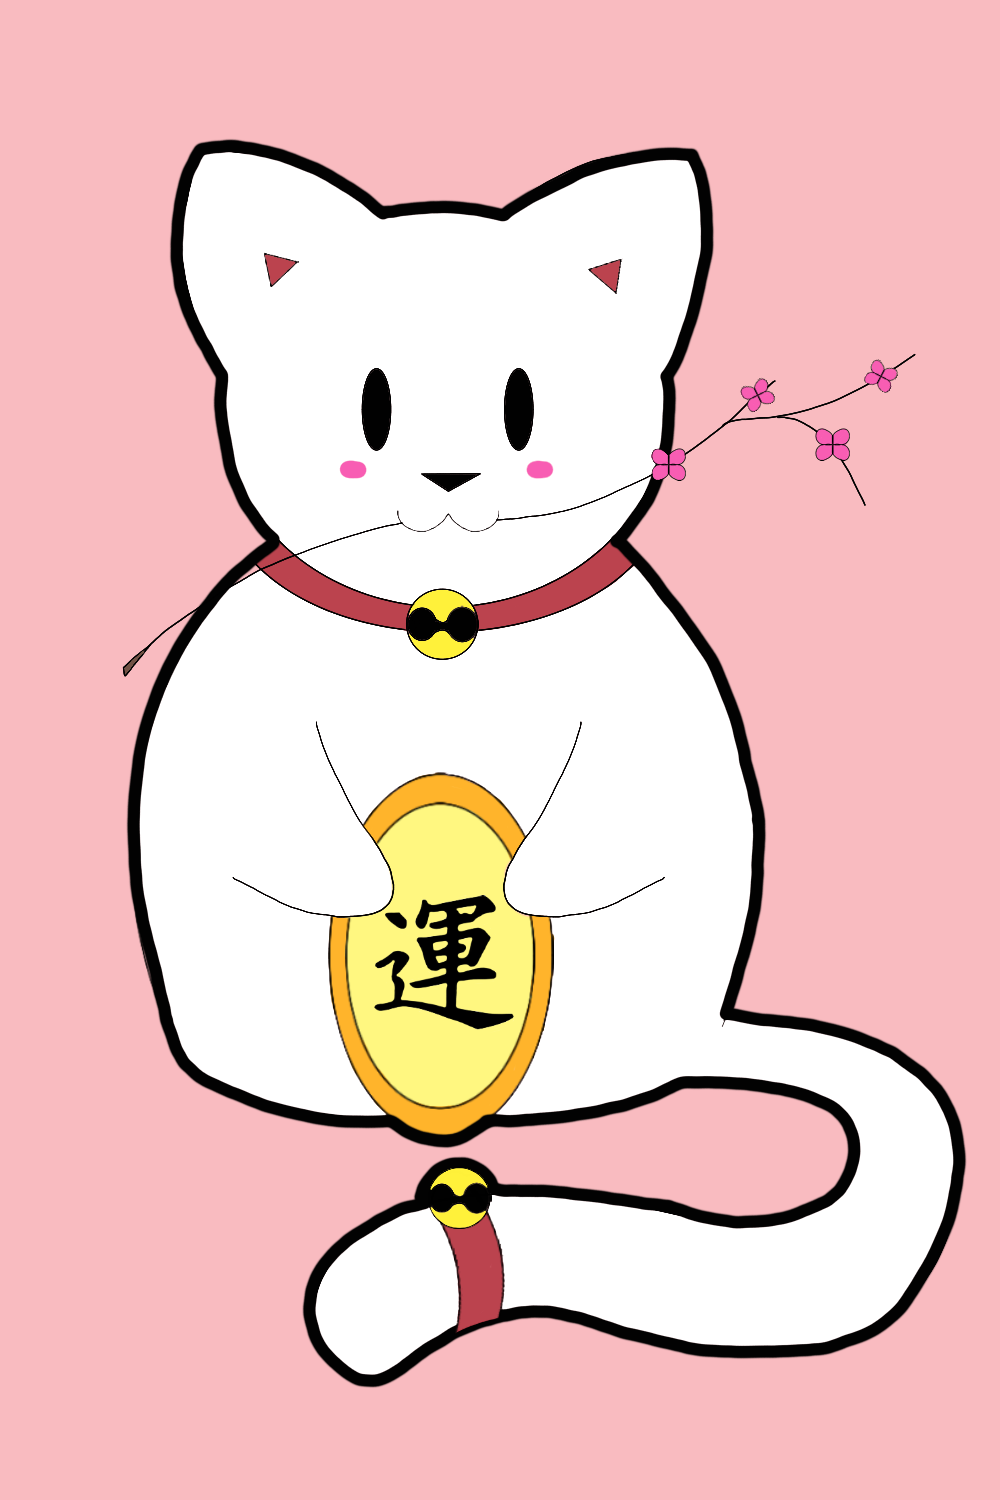 Japanese Cat by Chocolatecreature on DeviantArt